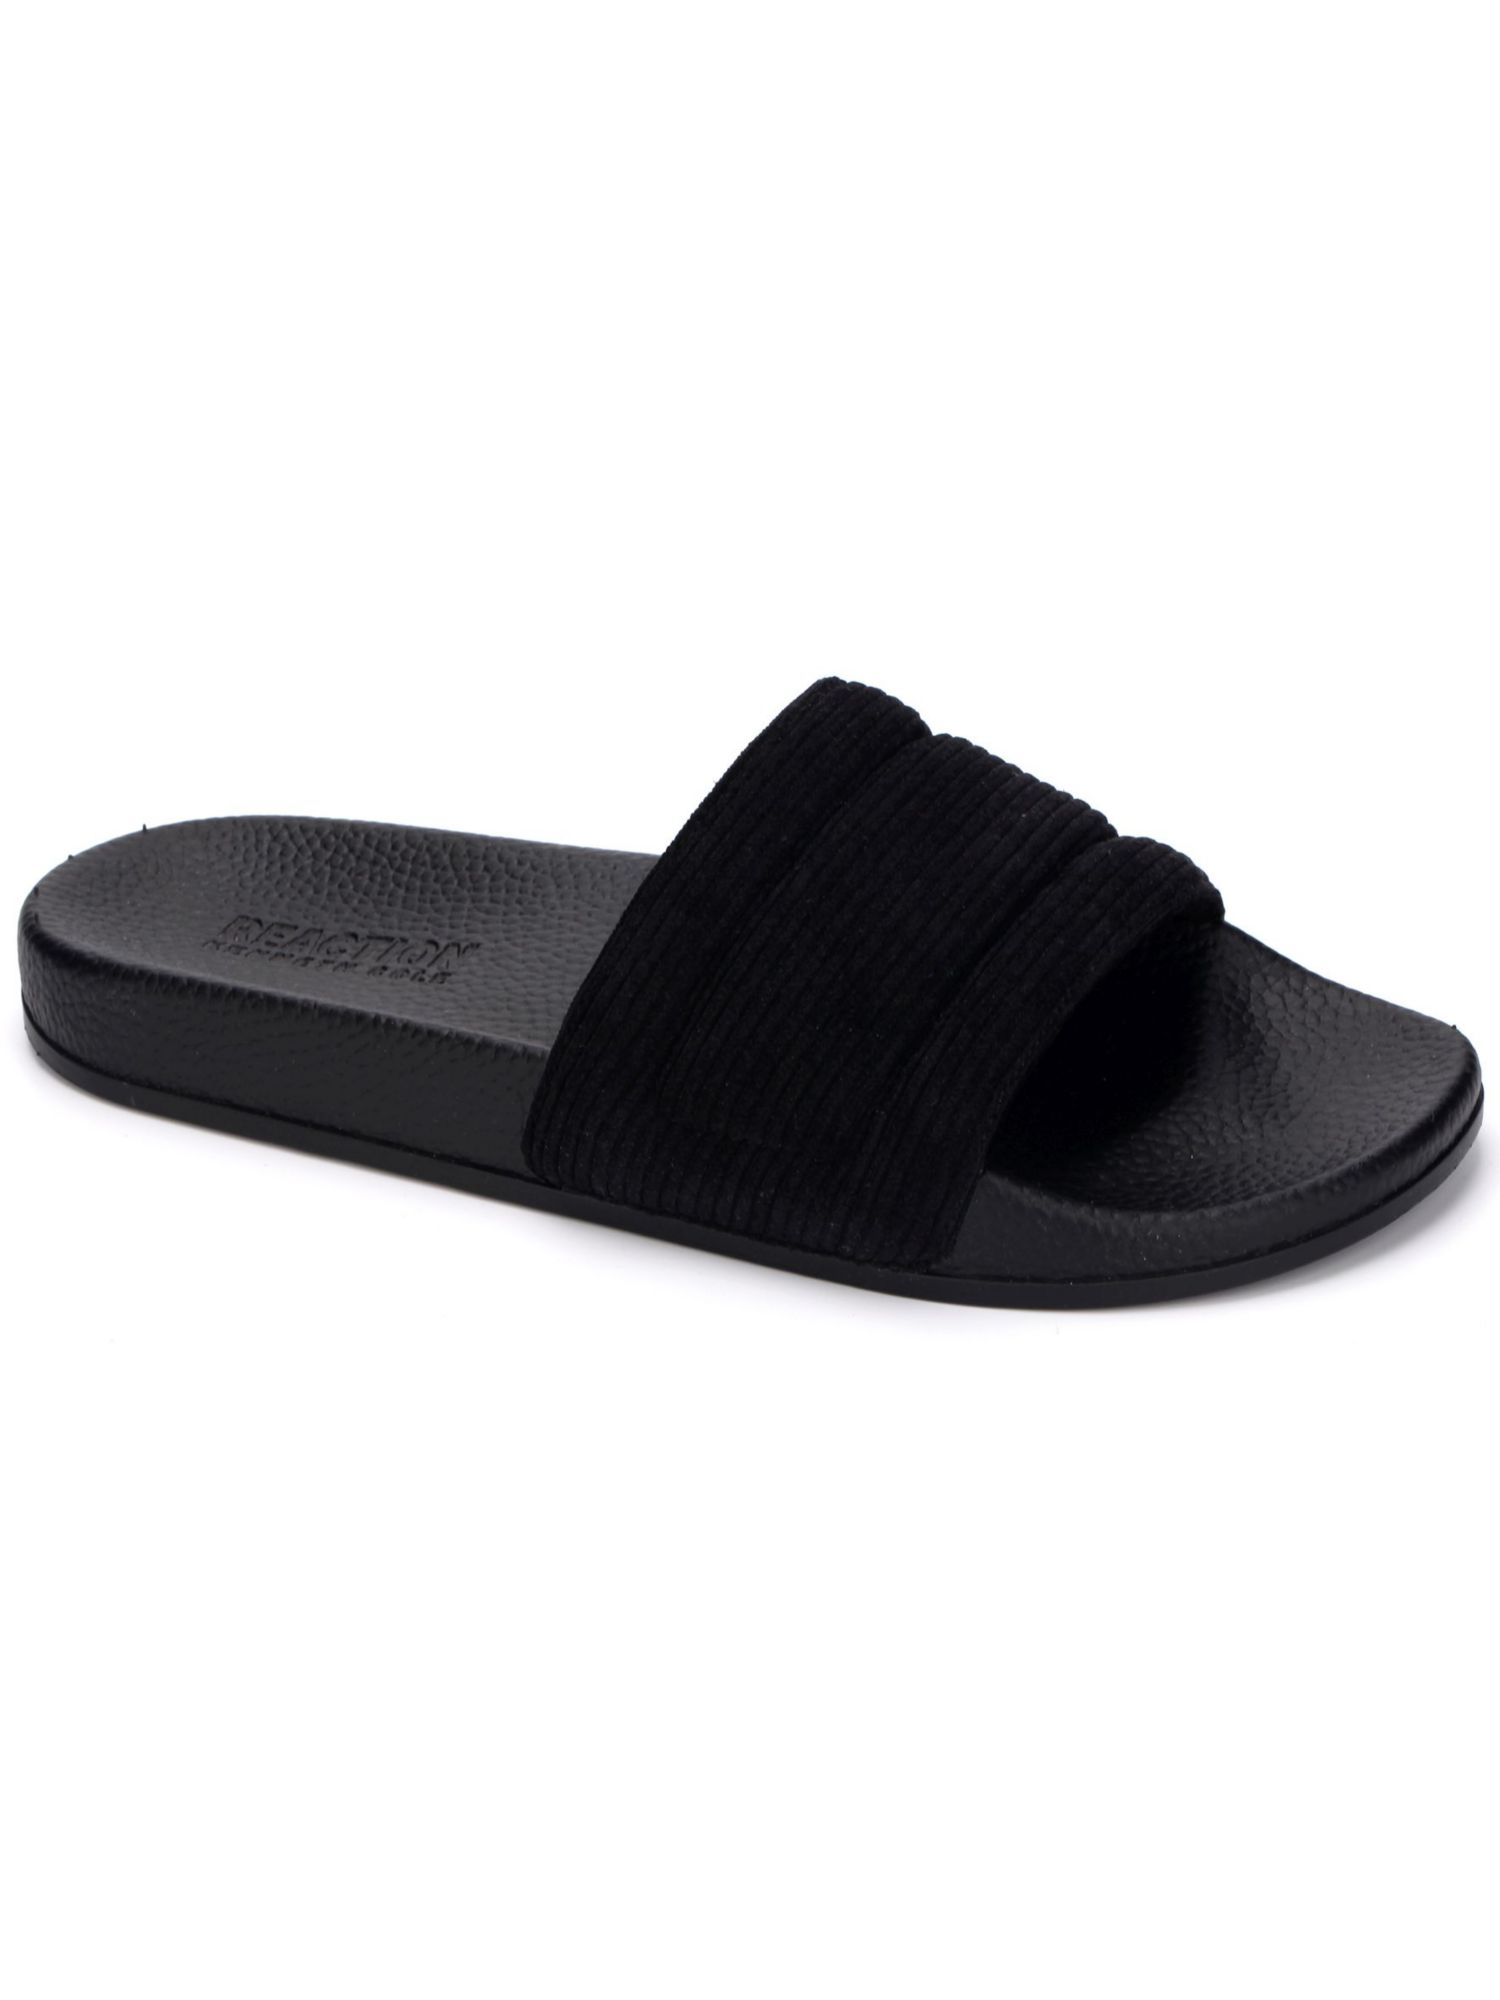 Kenneth Cole REACTION REACTION KENNETH COLE Mens Black Quilted Comfort Screen Open Toe Platform Slip On Slide Sandals Shoes 8